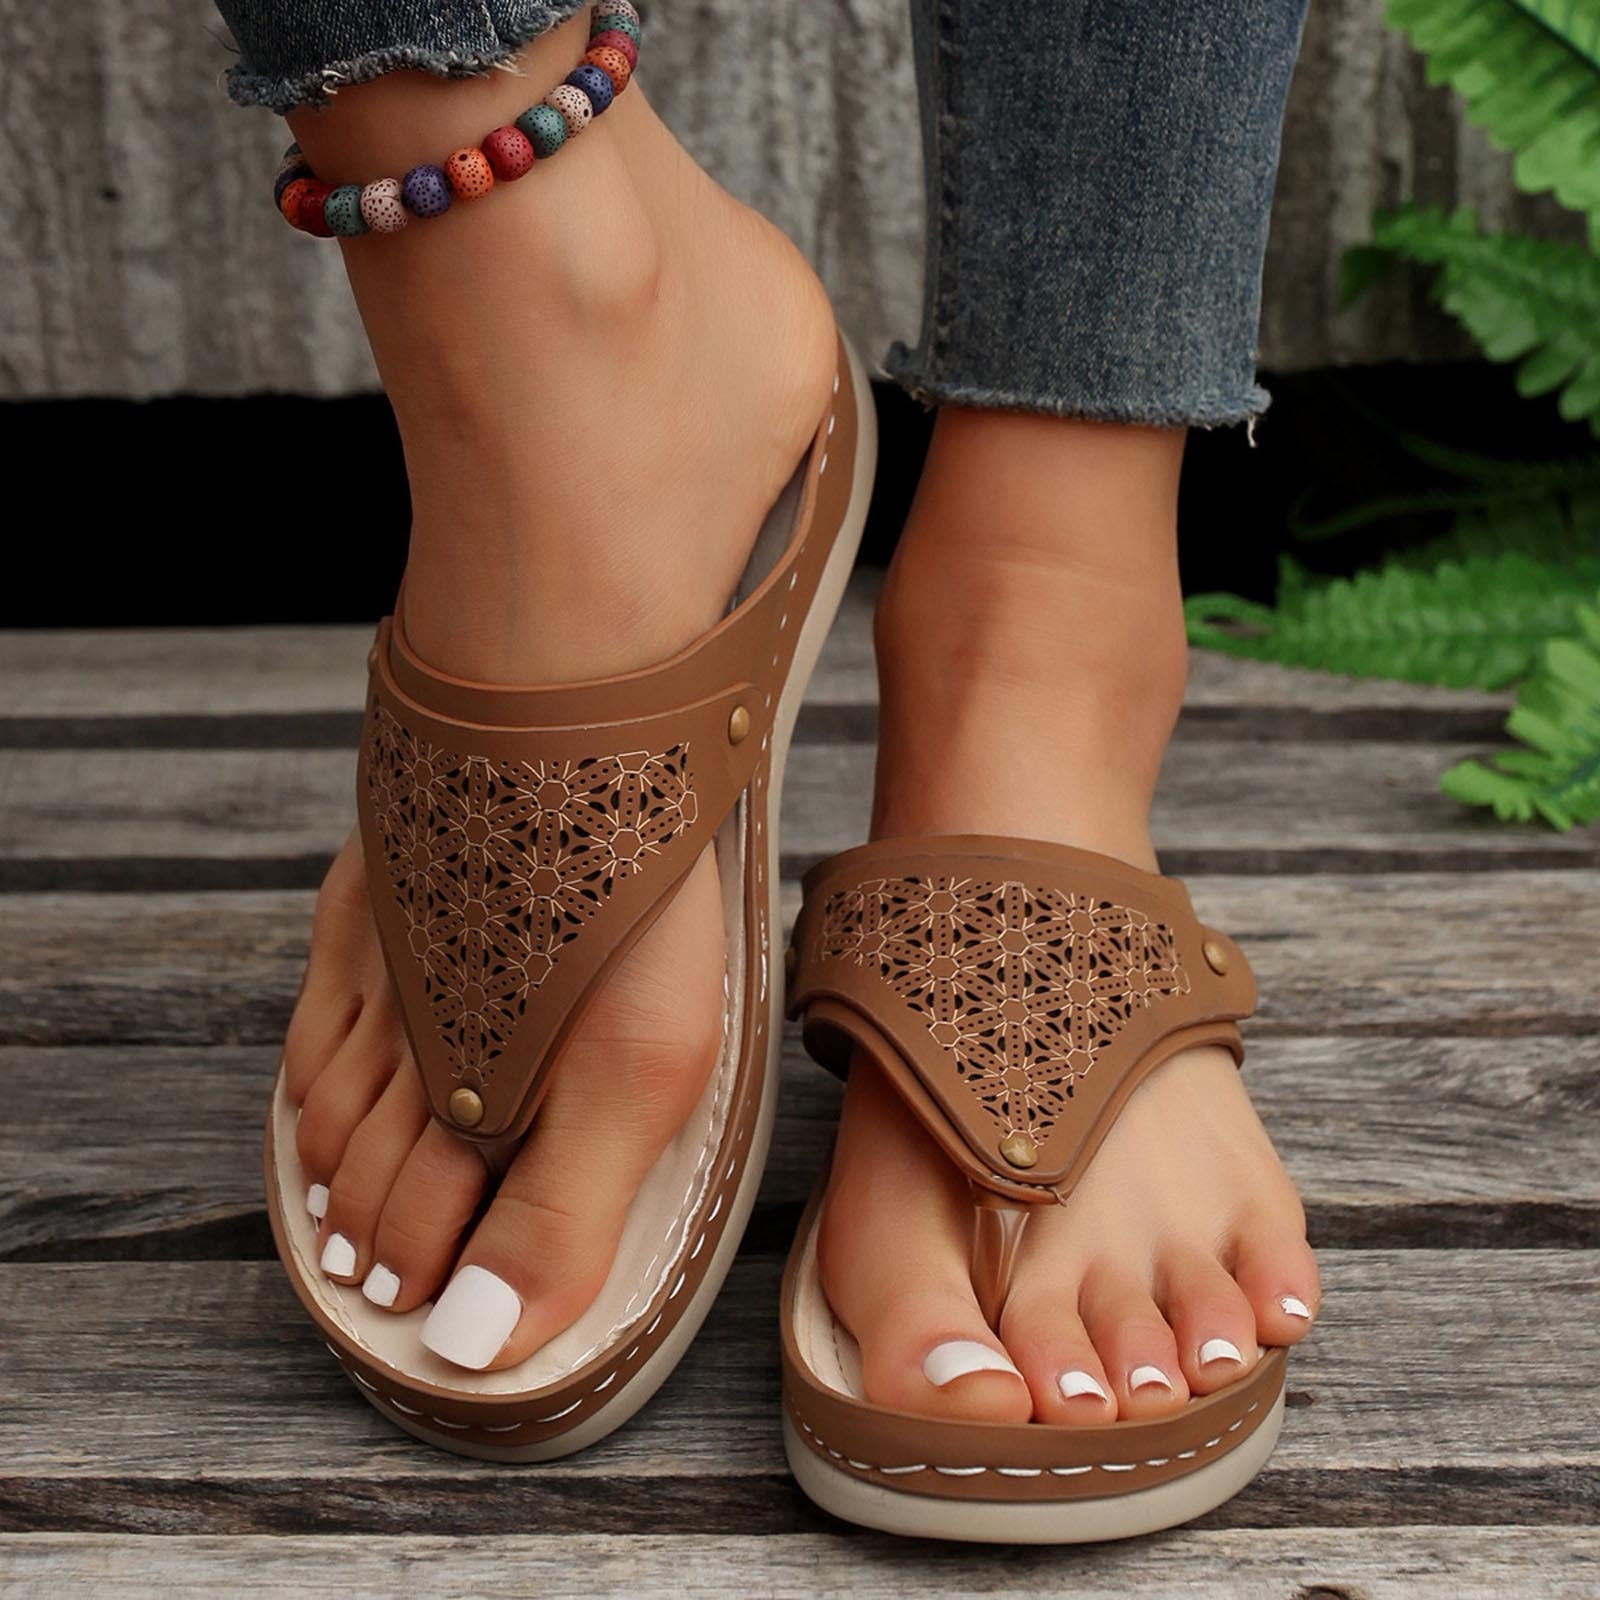 Women's Comfortable Heeled Sandals | Vionic Shoes